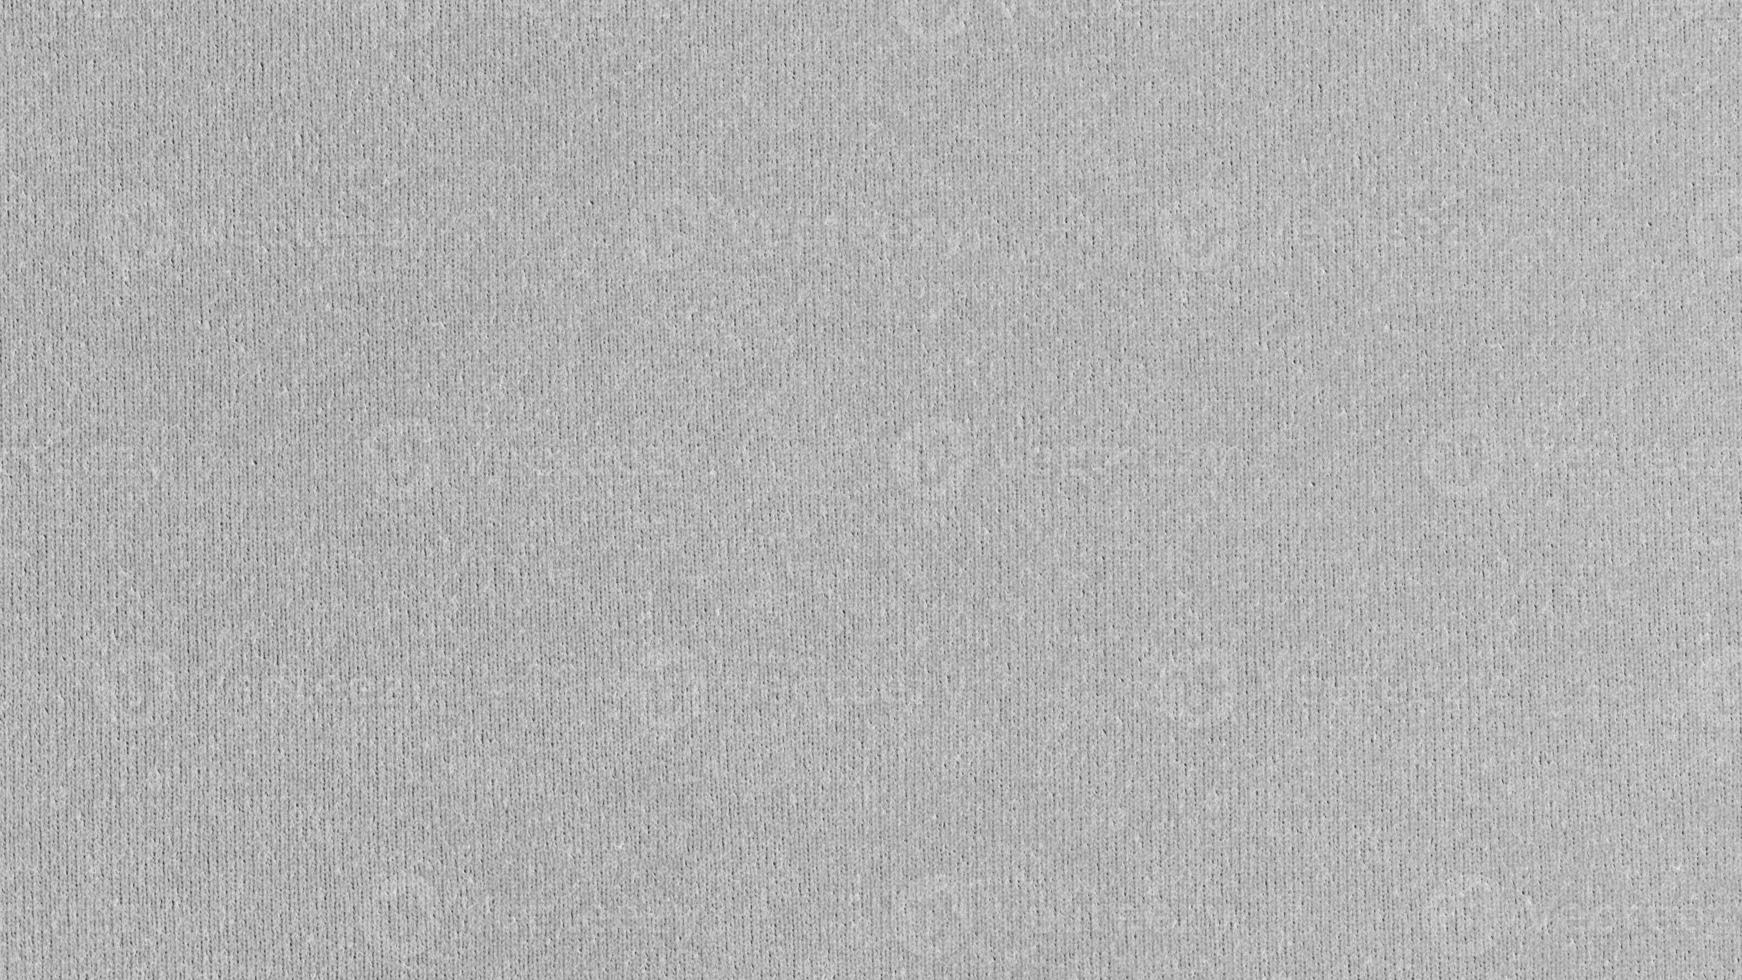 textura têxtil cinza para plano de fundo ou capa foto